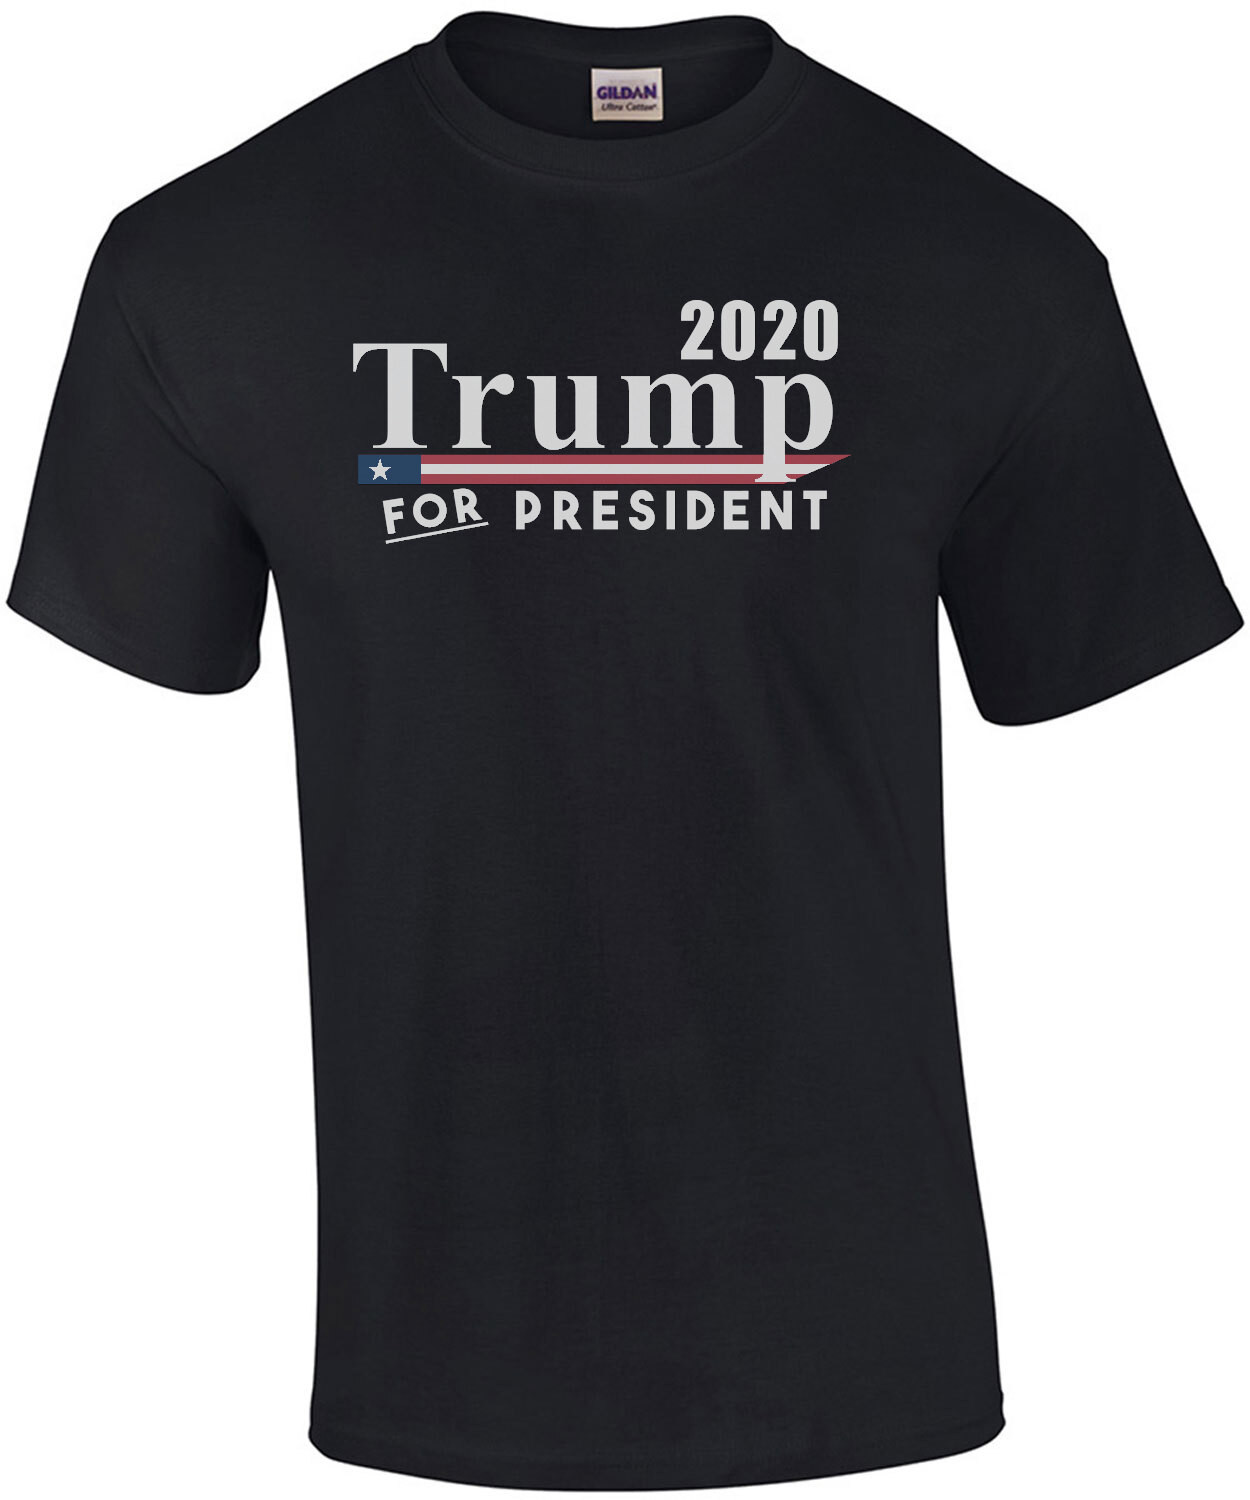 Trump for president 2020 - Donald Trump T-Shirt